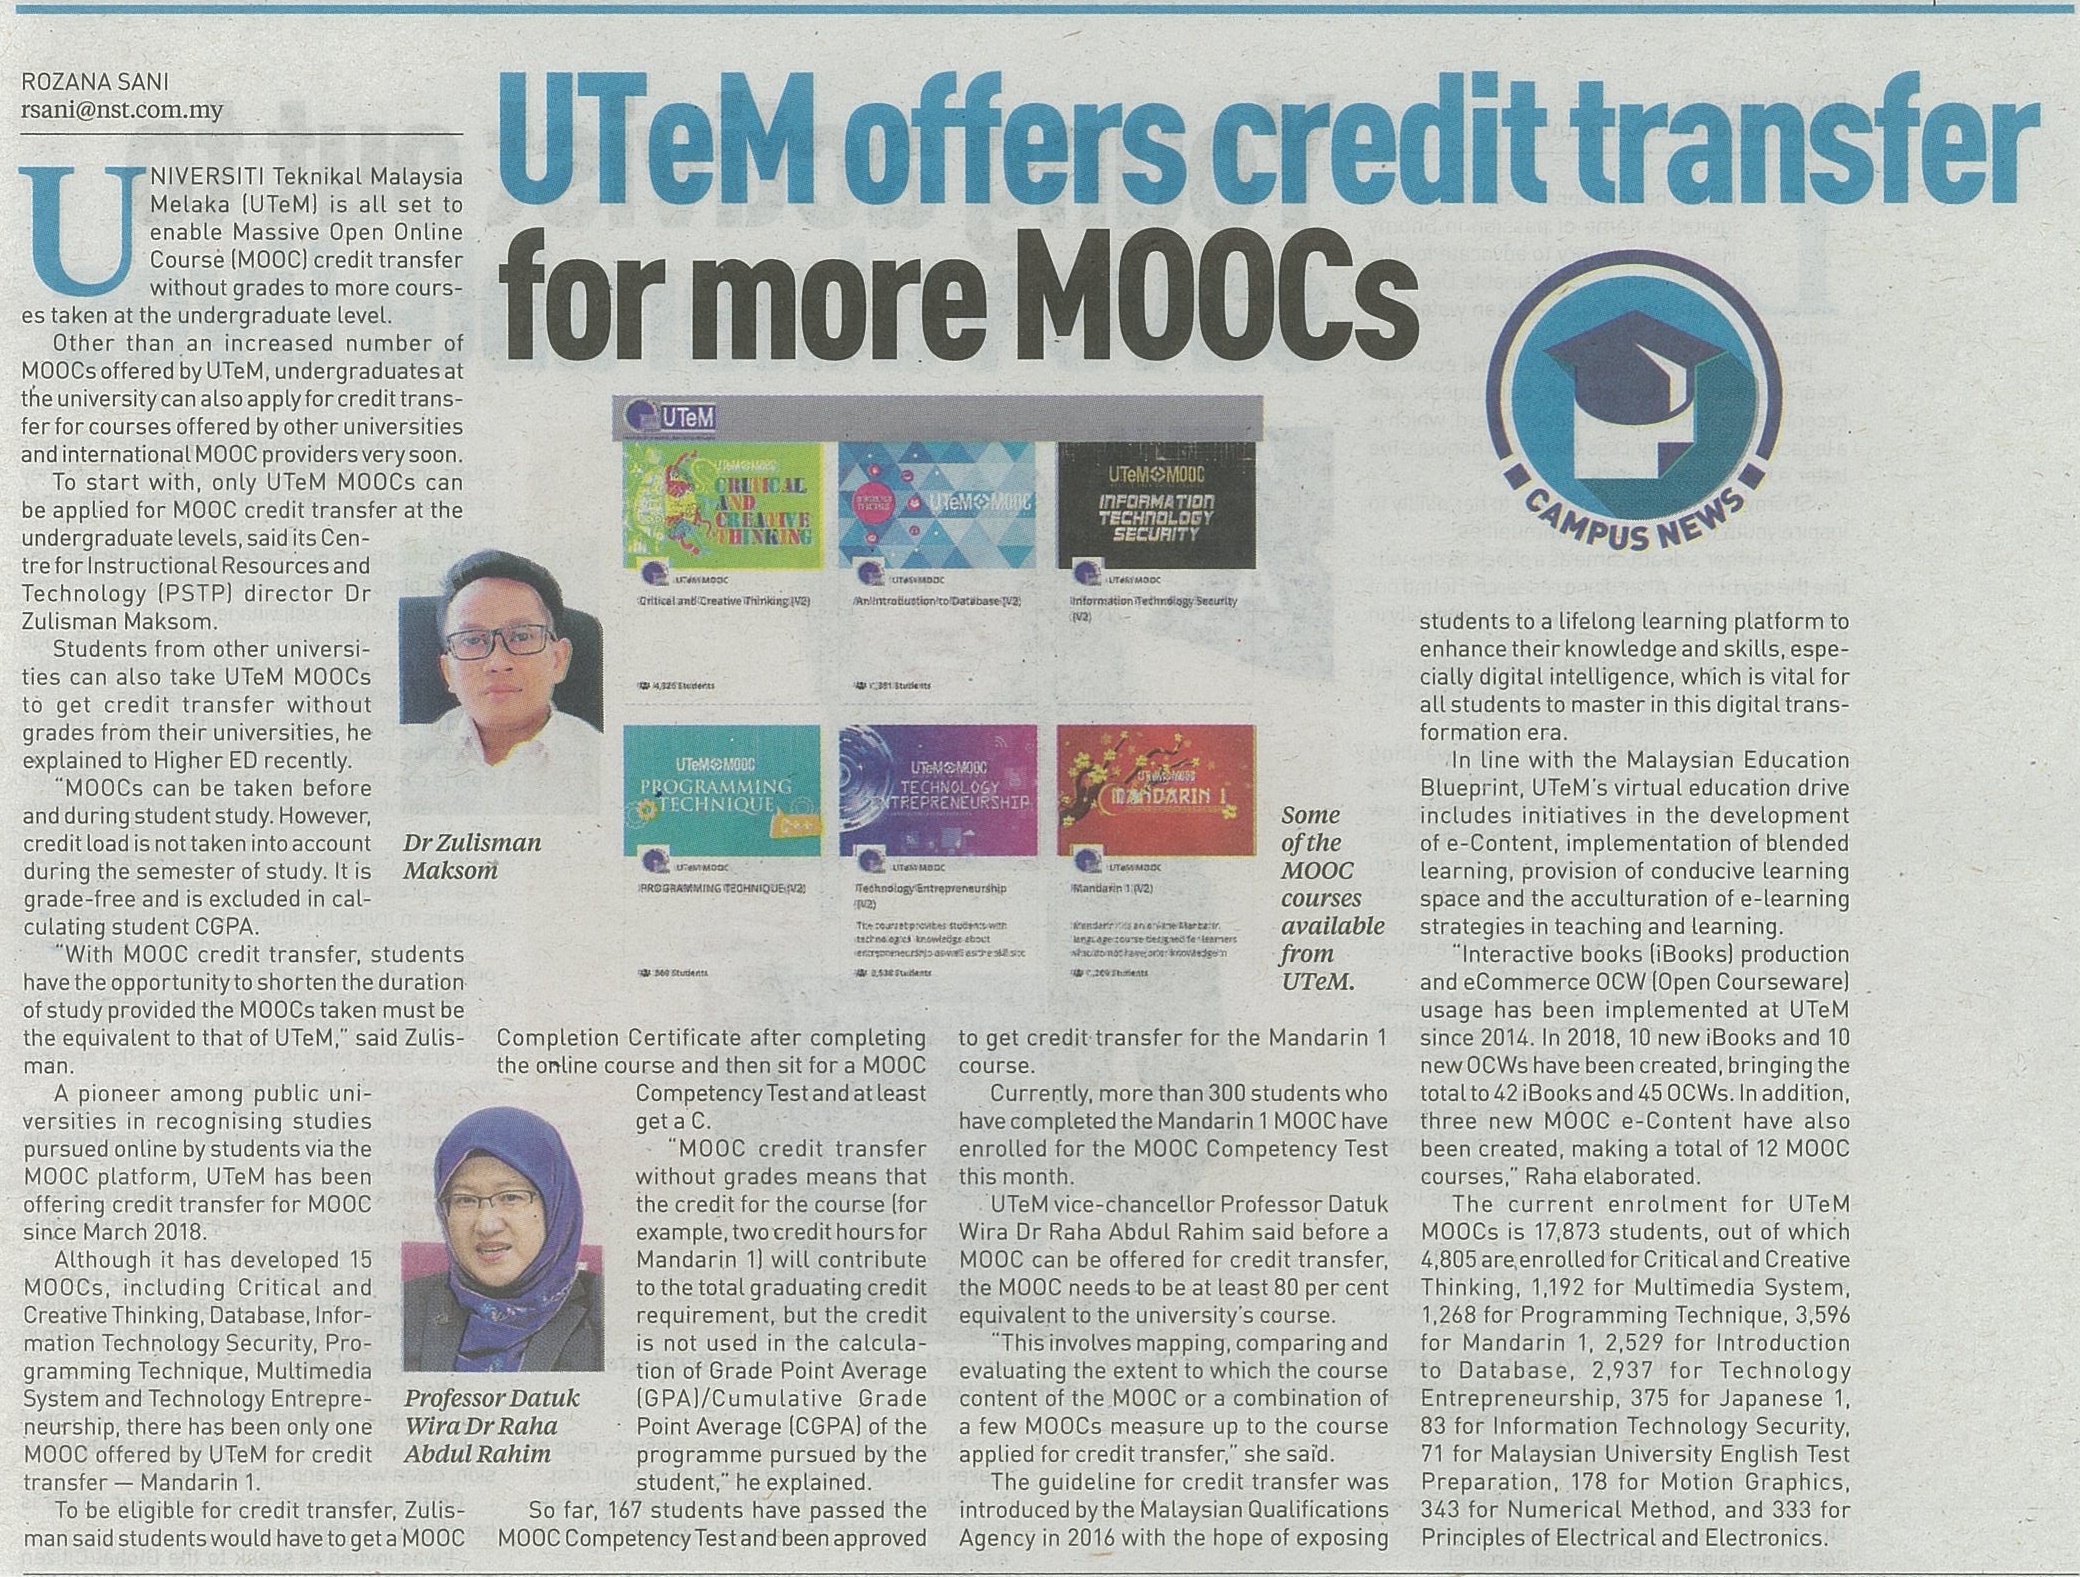 UTeM offers credit transfer for more MOOCs